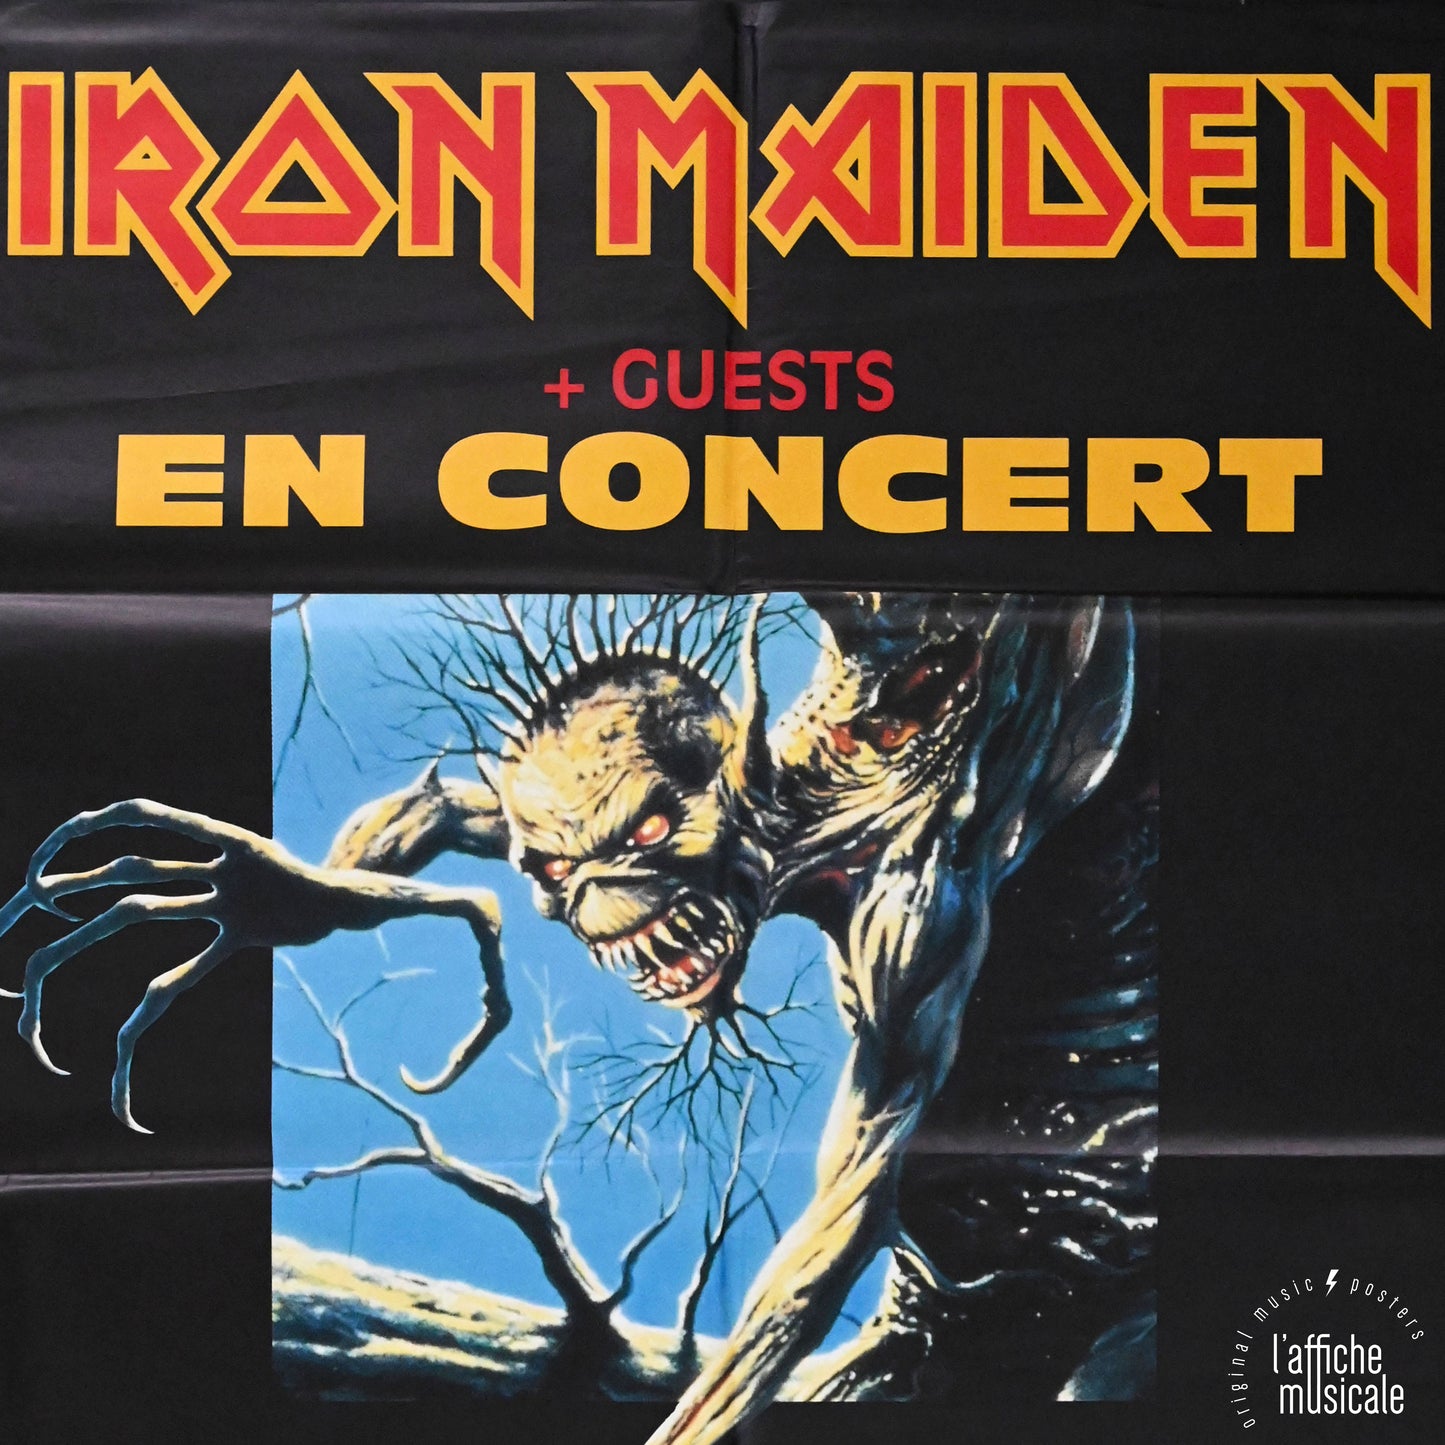 Iron Maiden - "Fear of The Dark Tour" - 1992